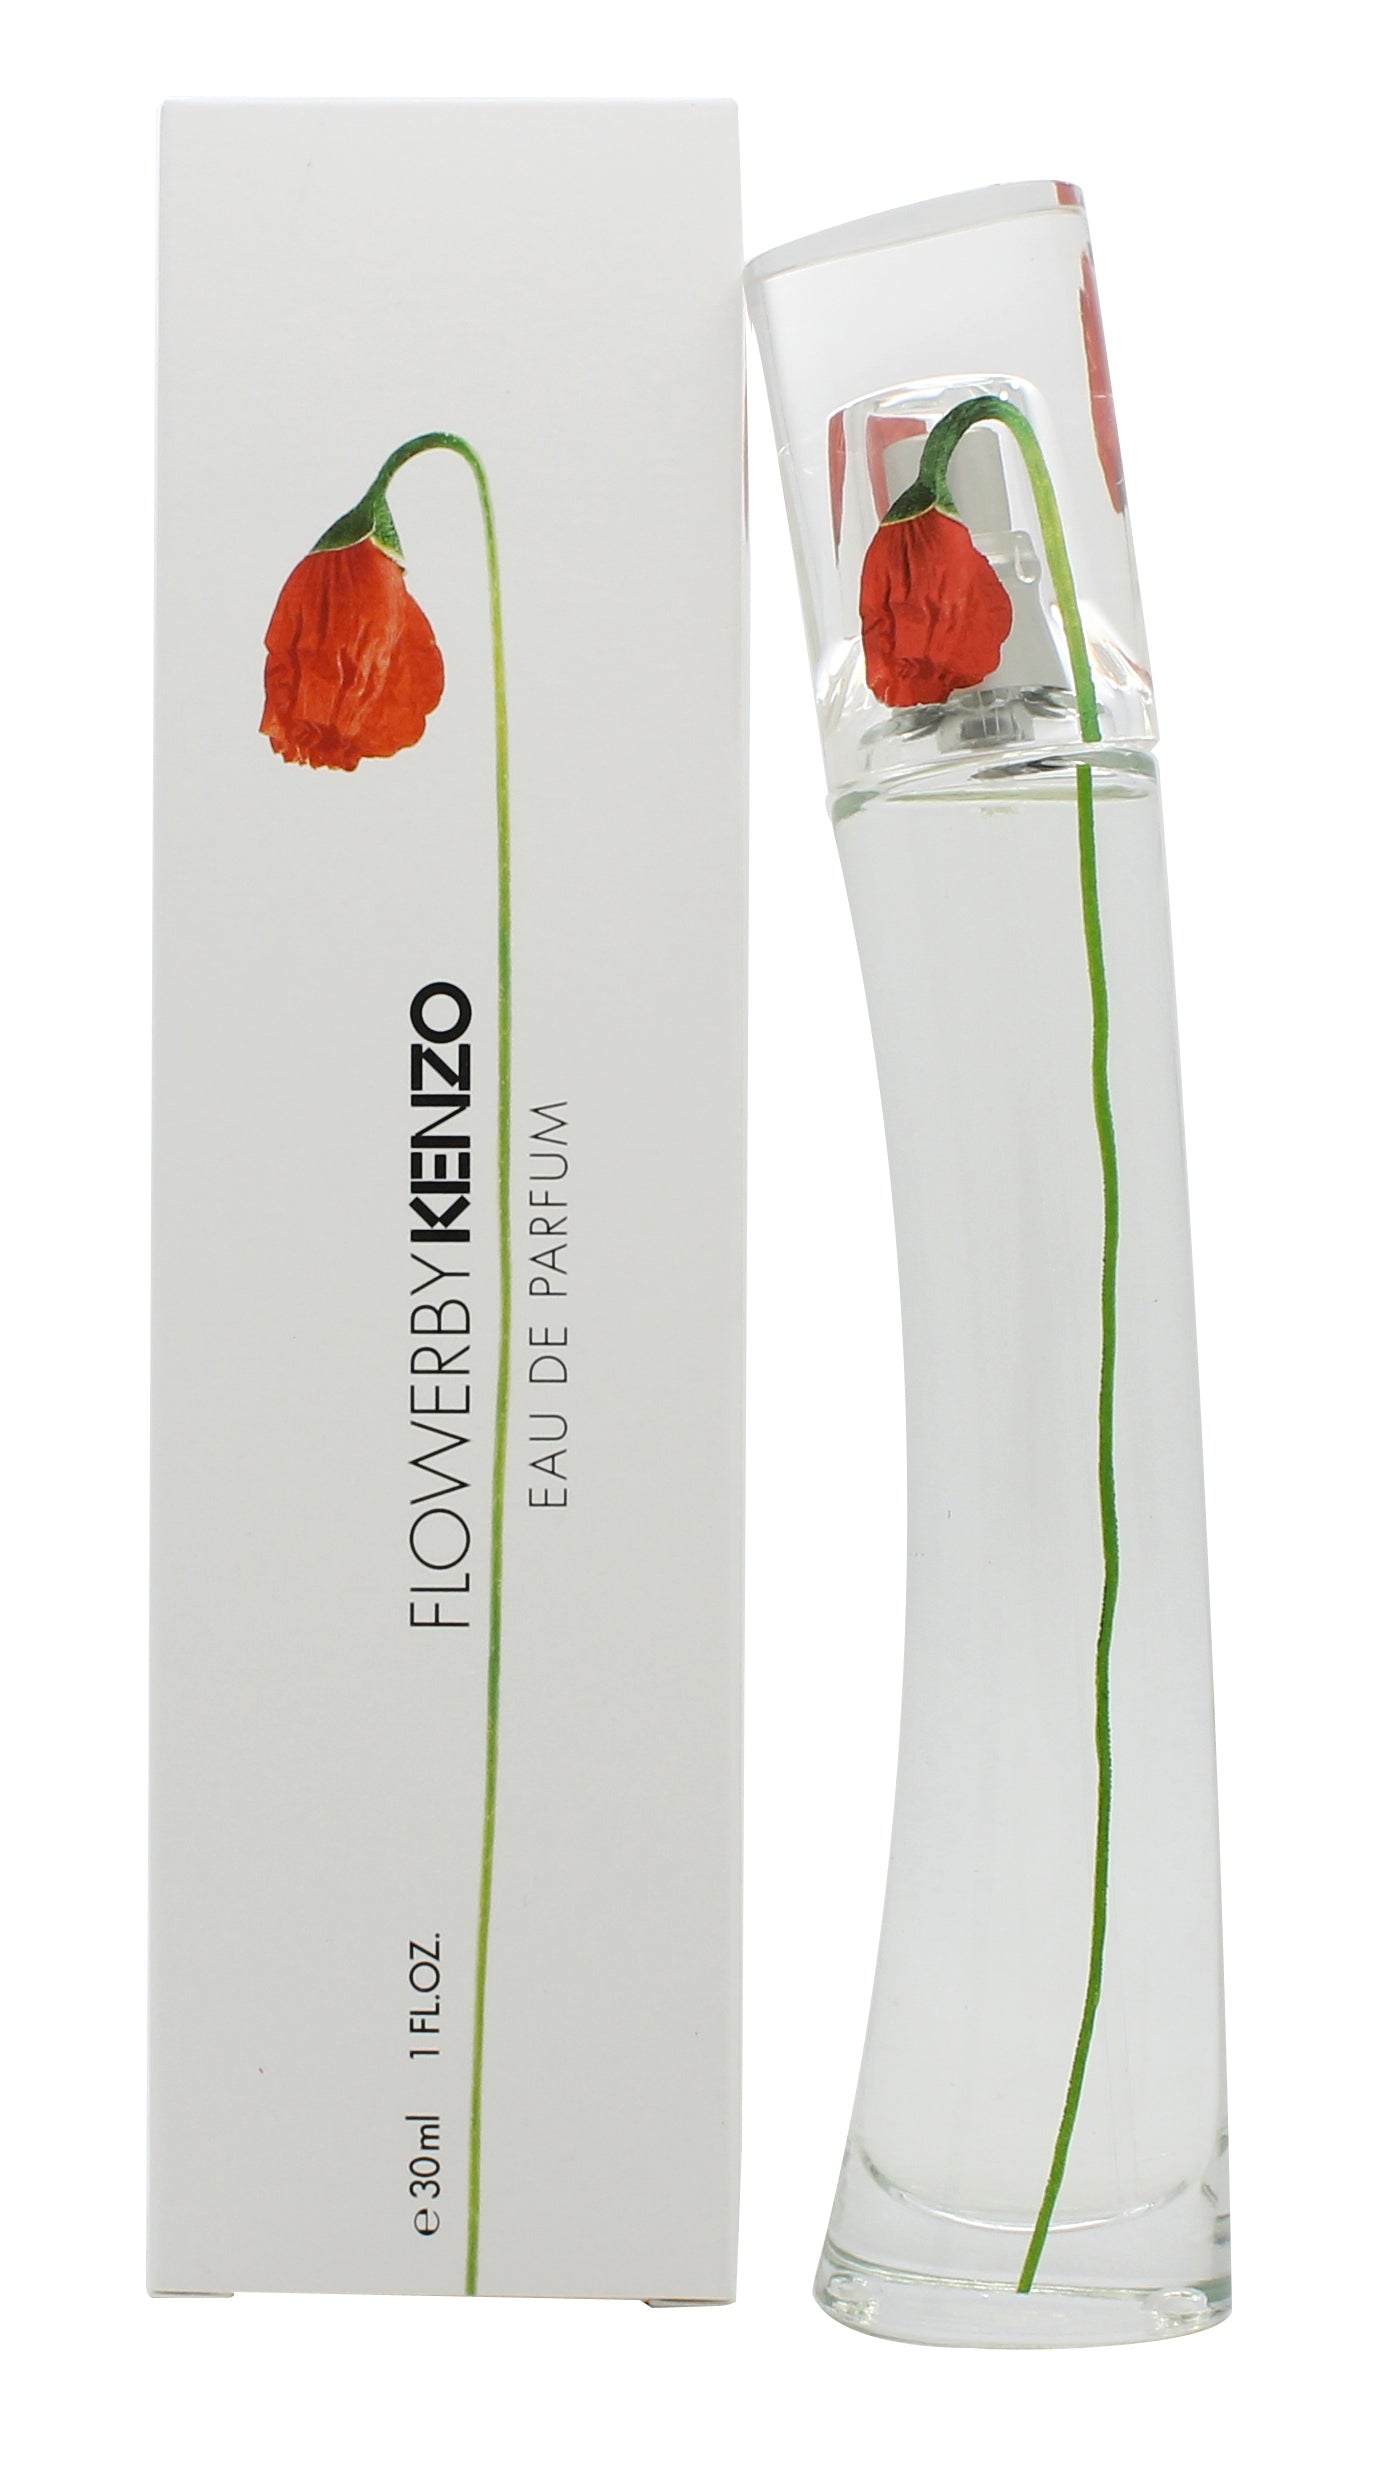 View Kenzo Flower Eau de Parfum 30ml Spray information